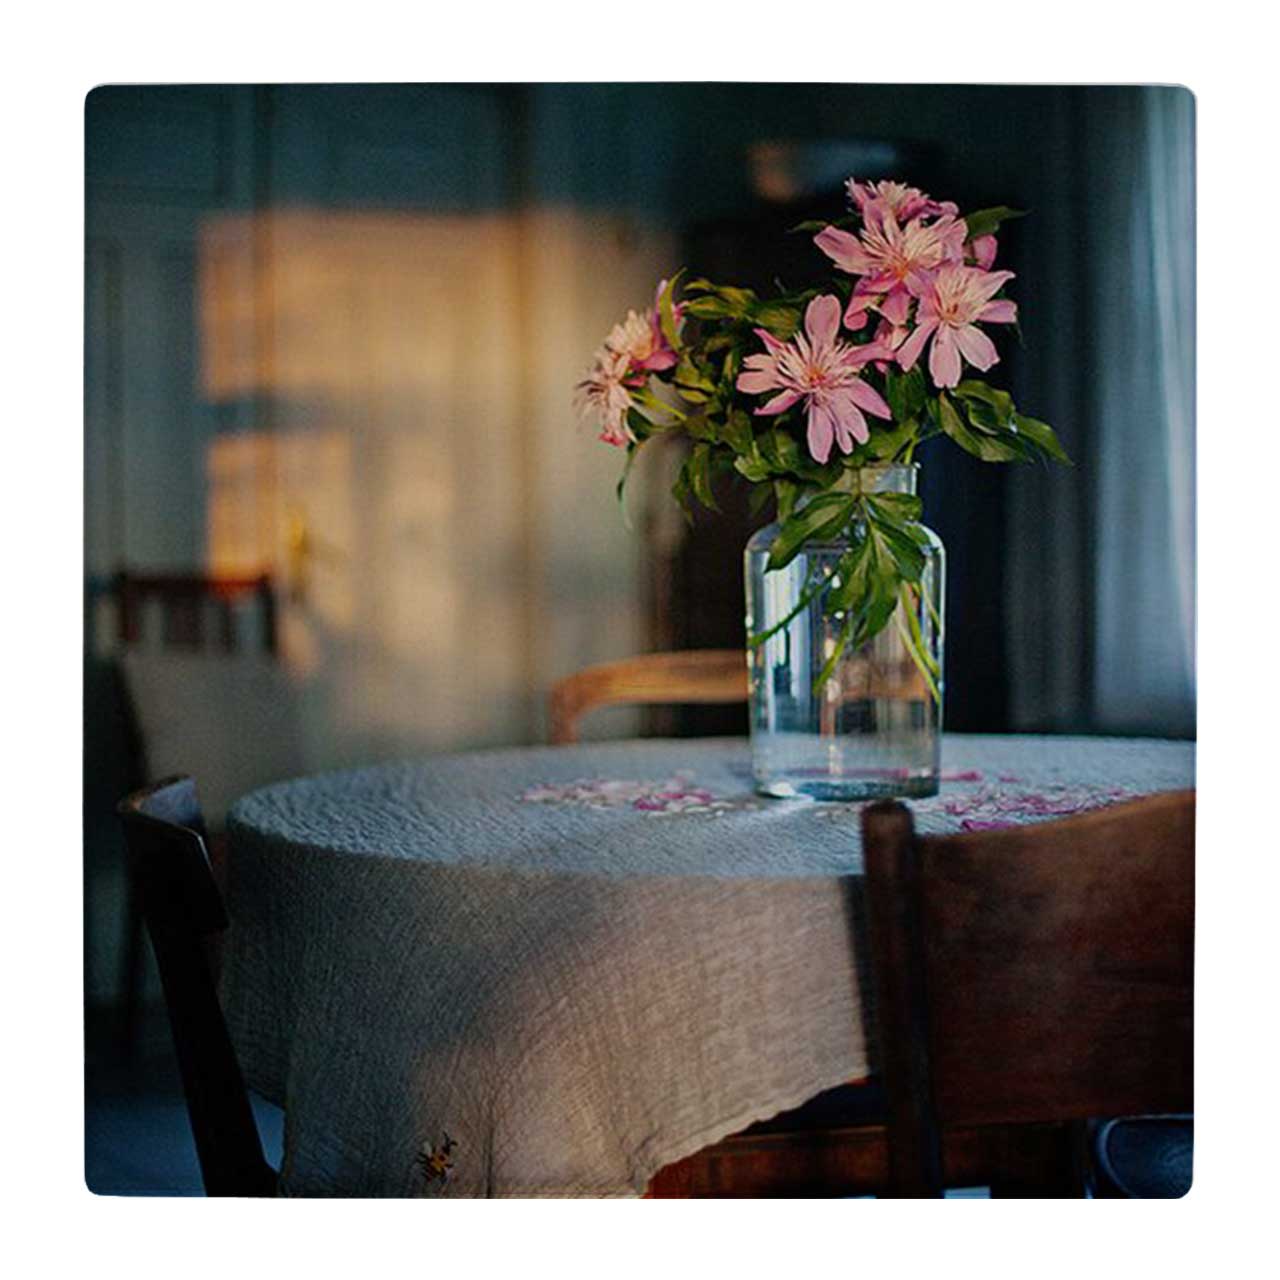 زیر لیوانی  طرح گلدان روی میز ناهار خوری کد    4824251_3712